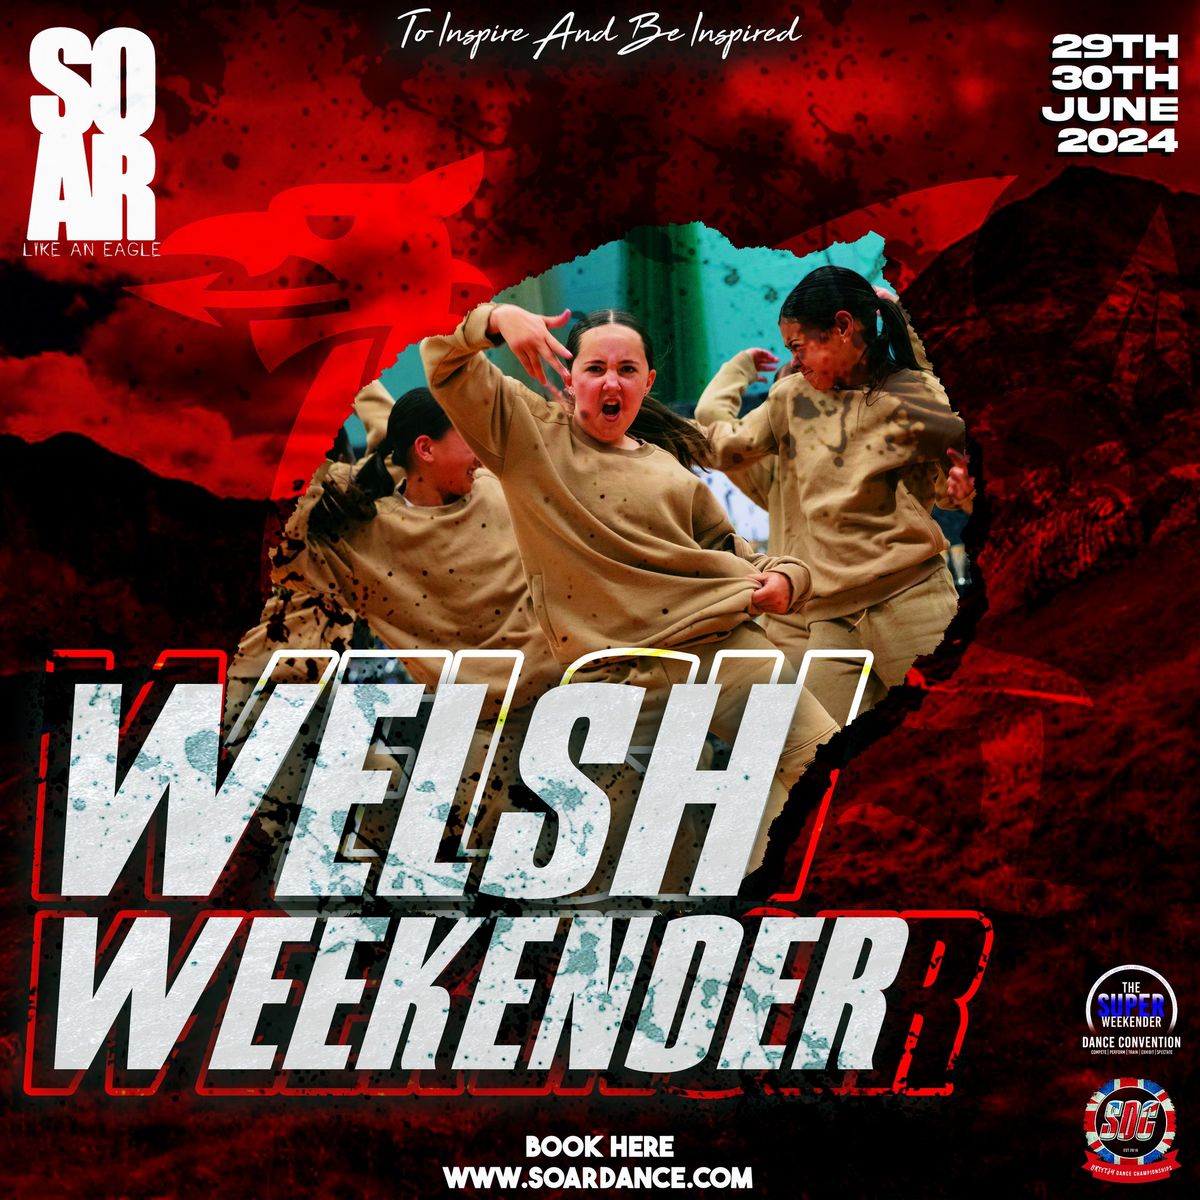 SOAR Welsh Weekender